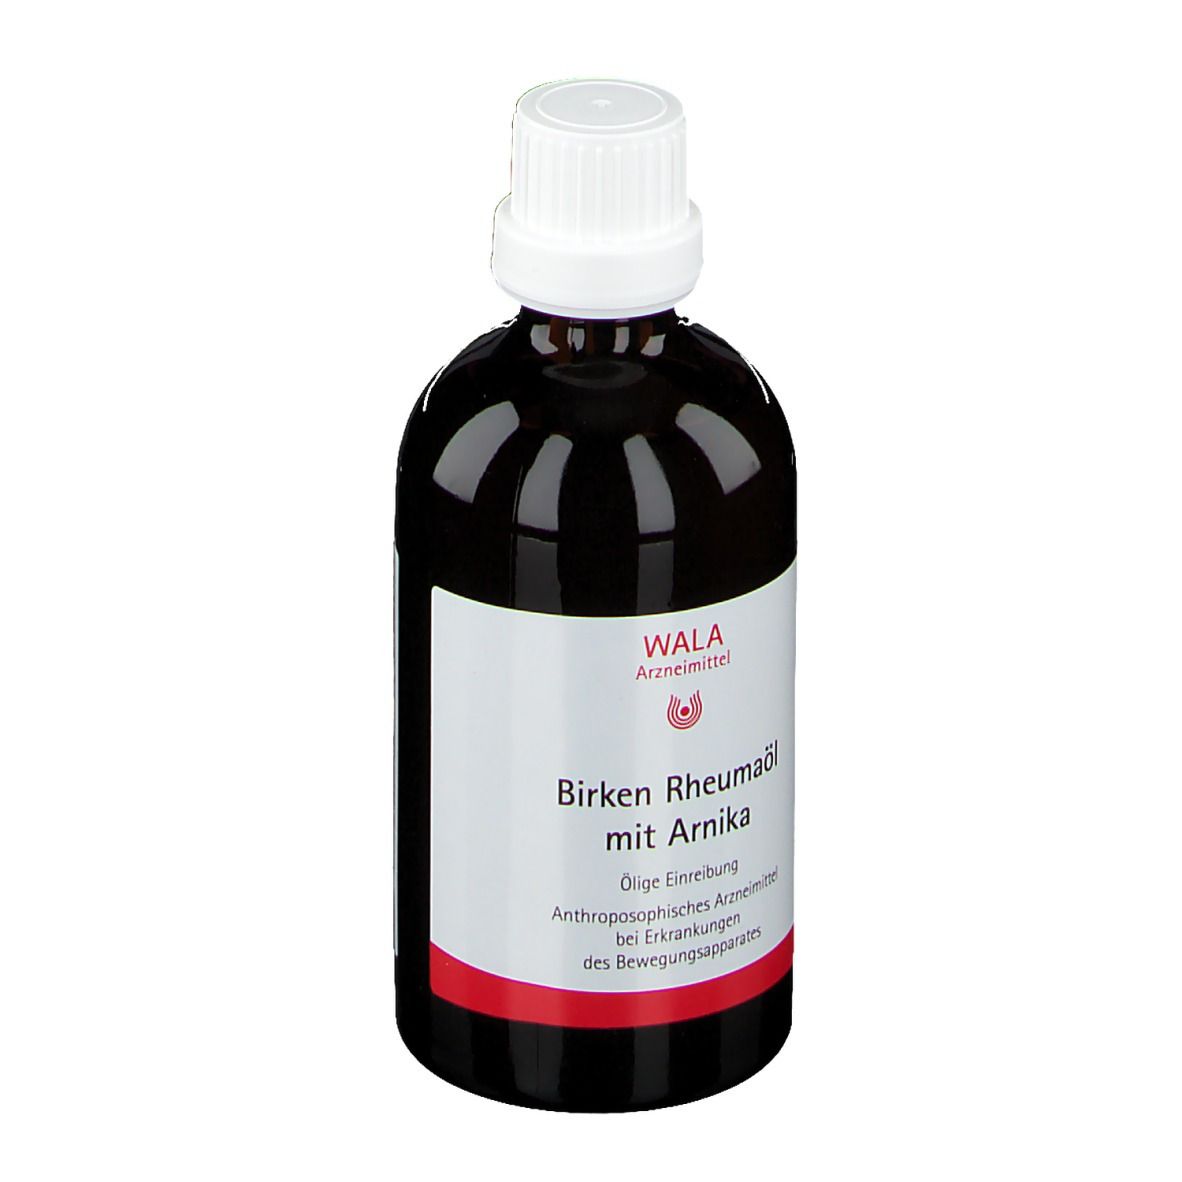 WALA® Birken Rheumaöl mit Arnika